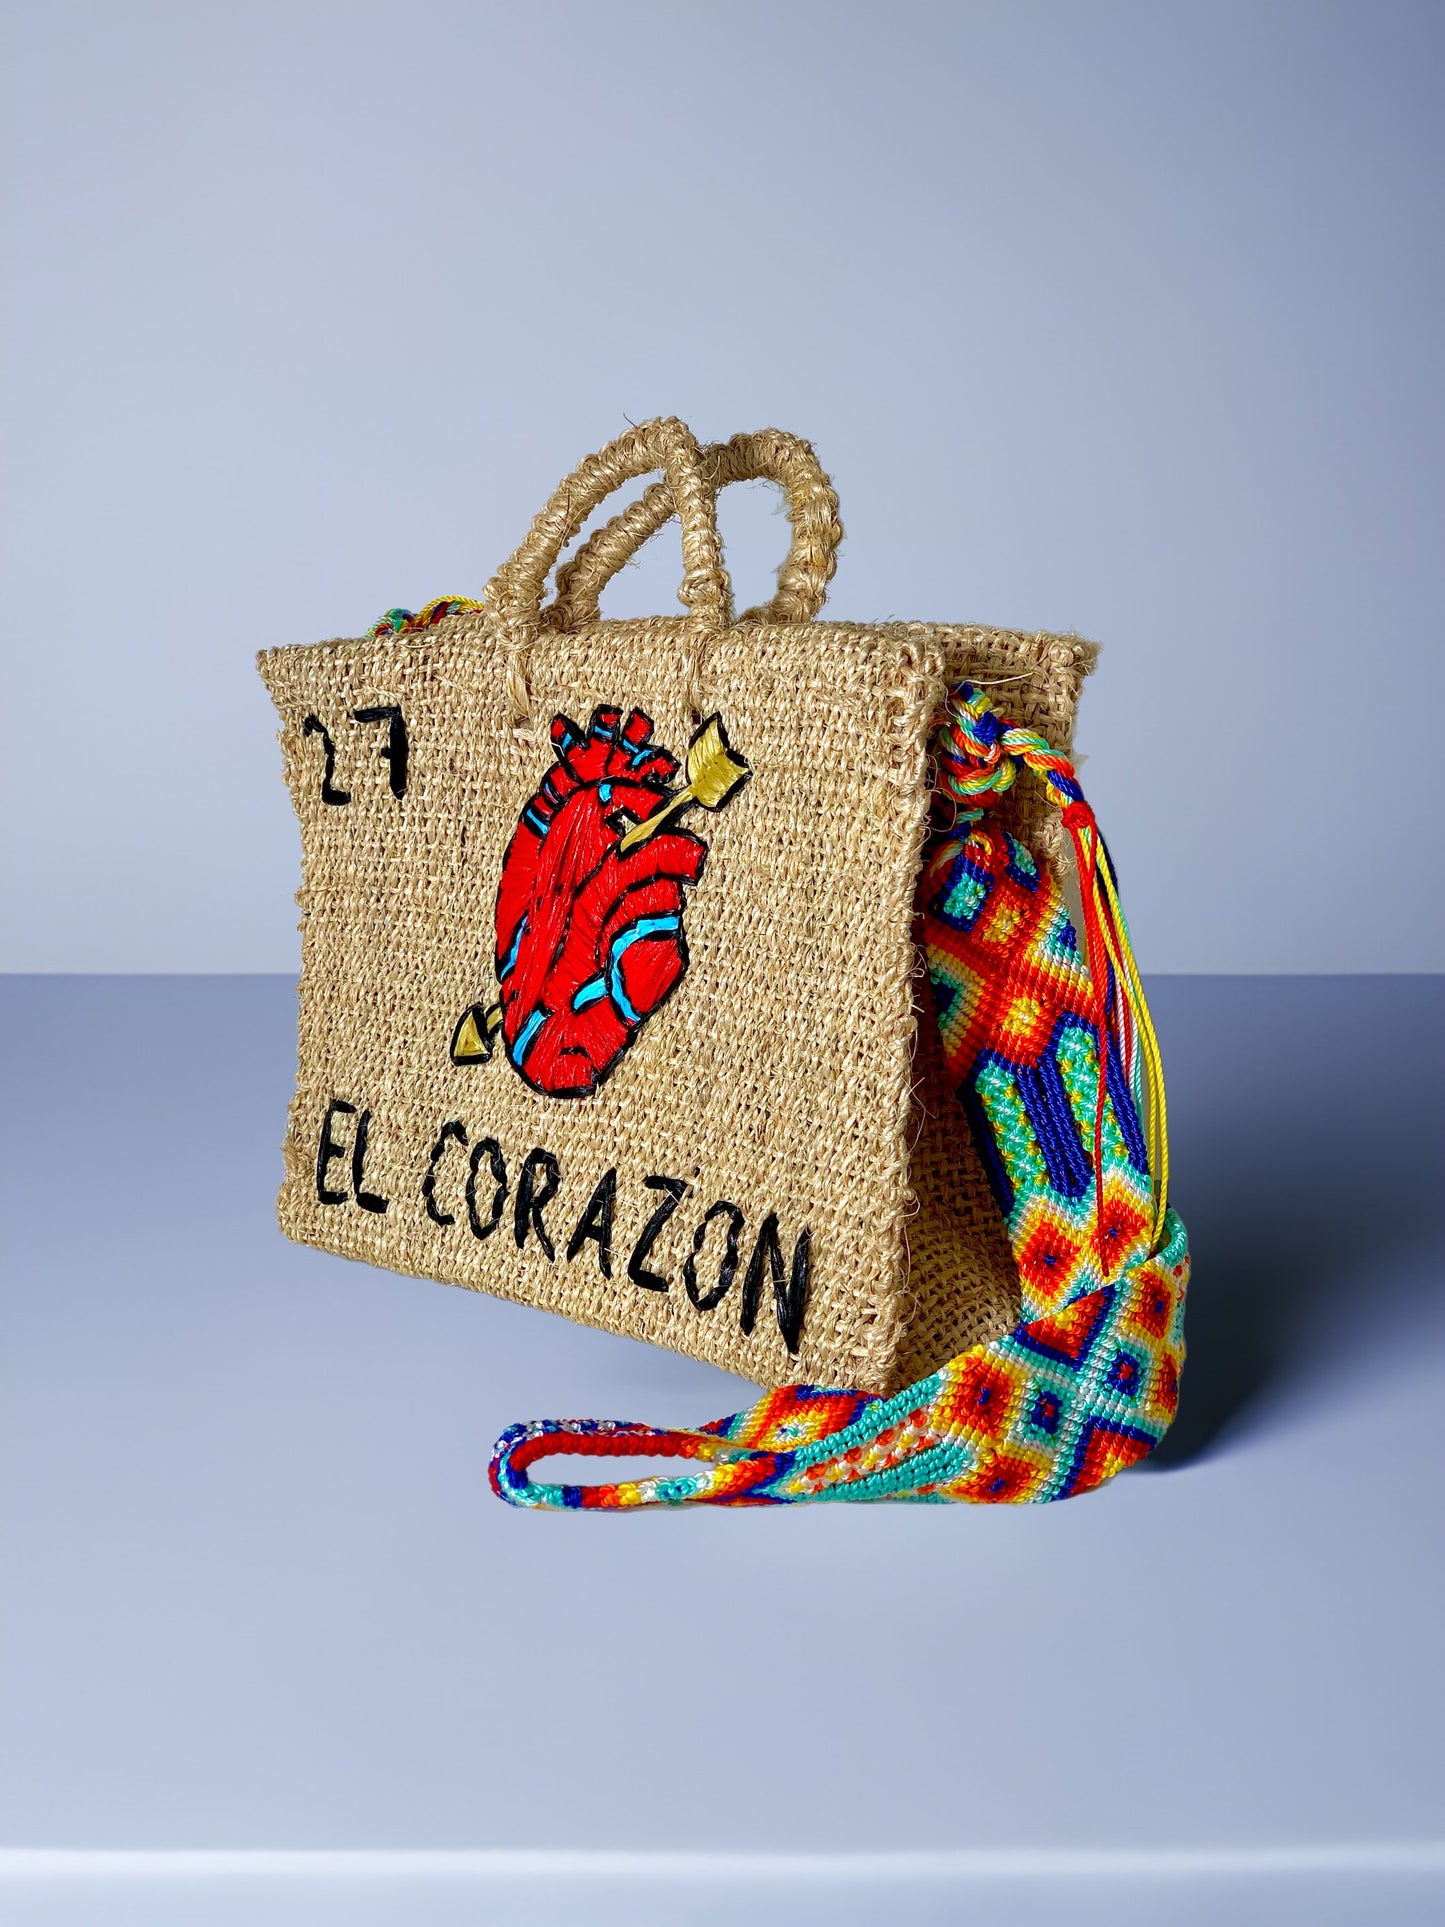 El Corazon lottery henequen bag